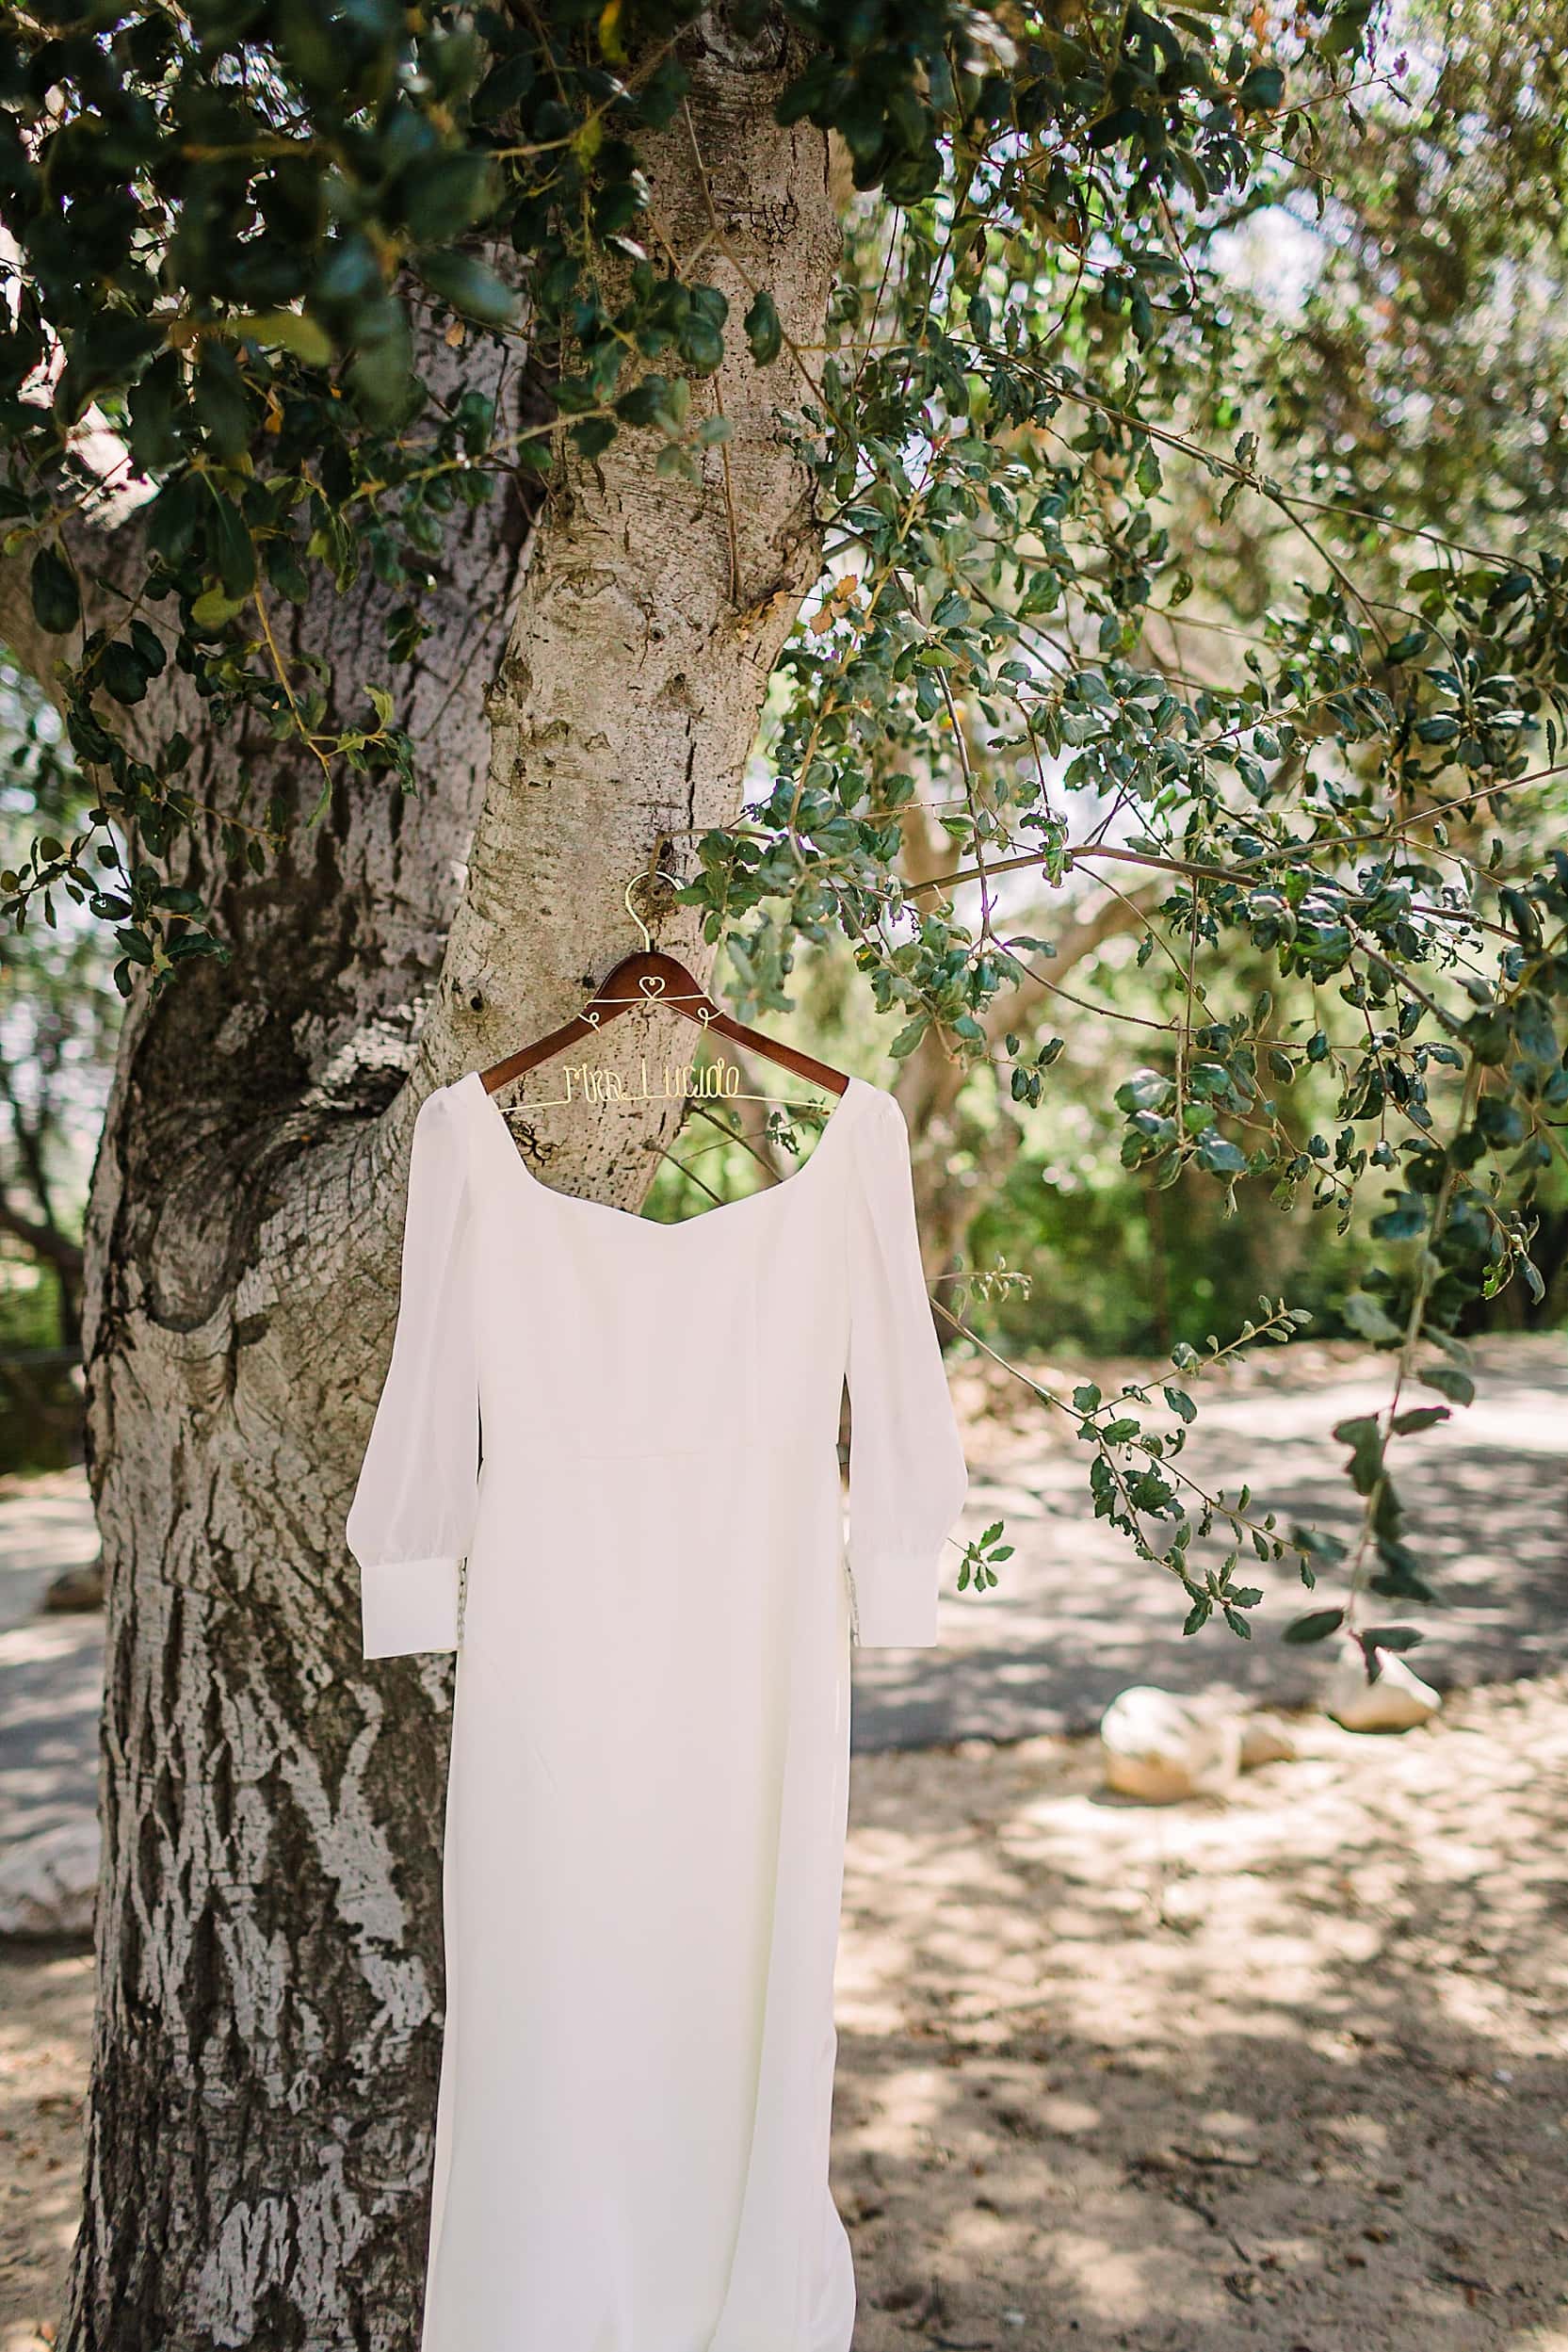 Wedding dress hanging from tree in botanical garden